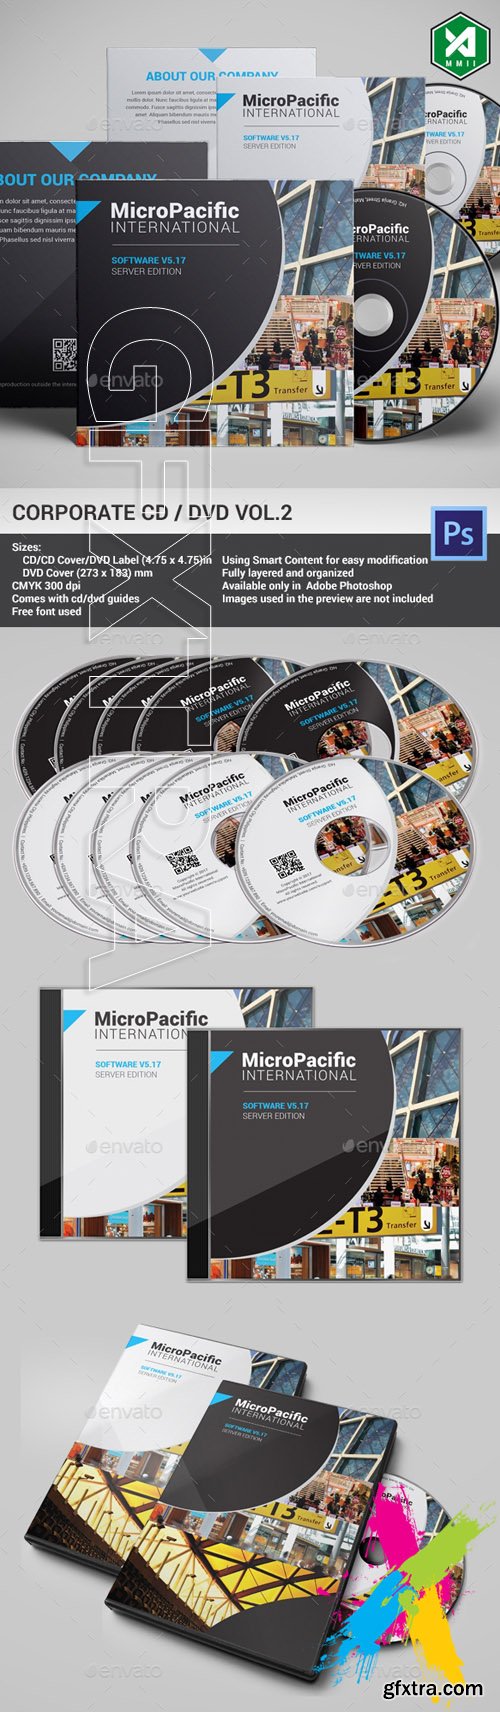 Graphicriver - Corporate CD DVD Template Vol.2 19996343